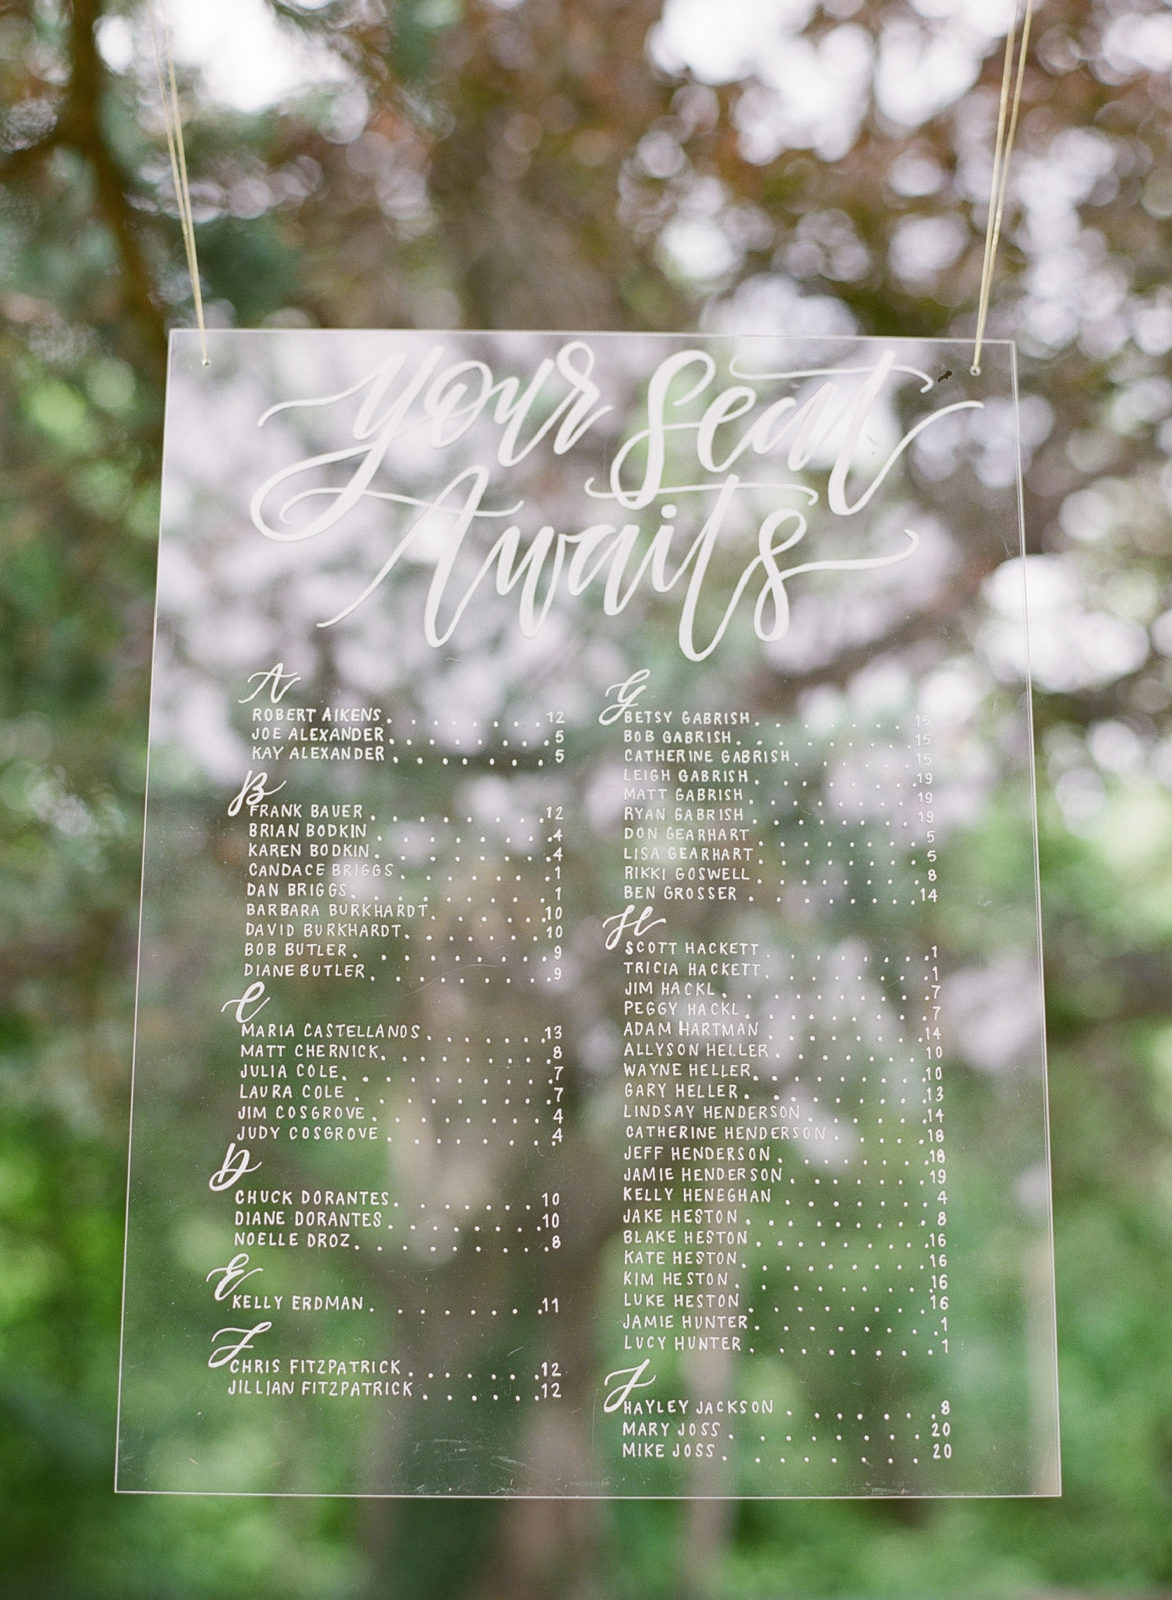 Laurel Hall Wedding Photos | Molly Carr Photography | Fine Art Film Photographer | Chicago Wedding | Summer Garden Party Wedding | European Wedding Inspiration | Outdoor Wedding Reception | Acrylic Seating Chart